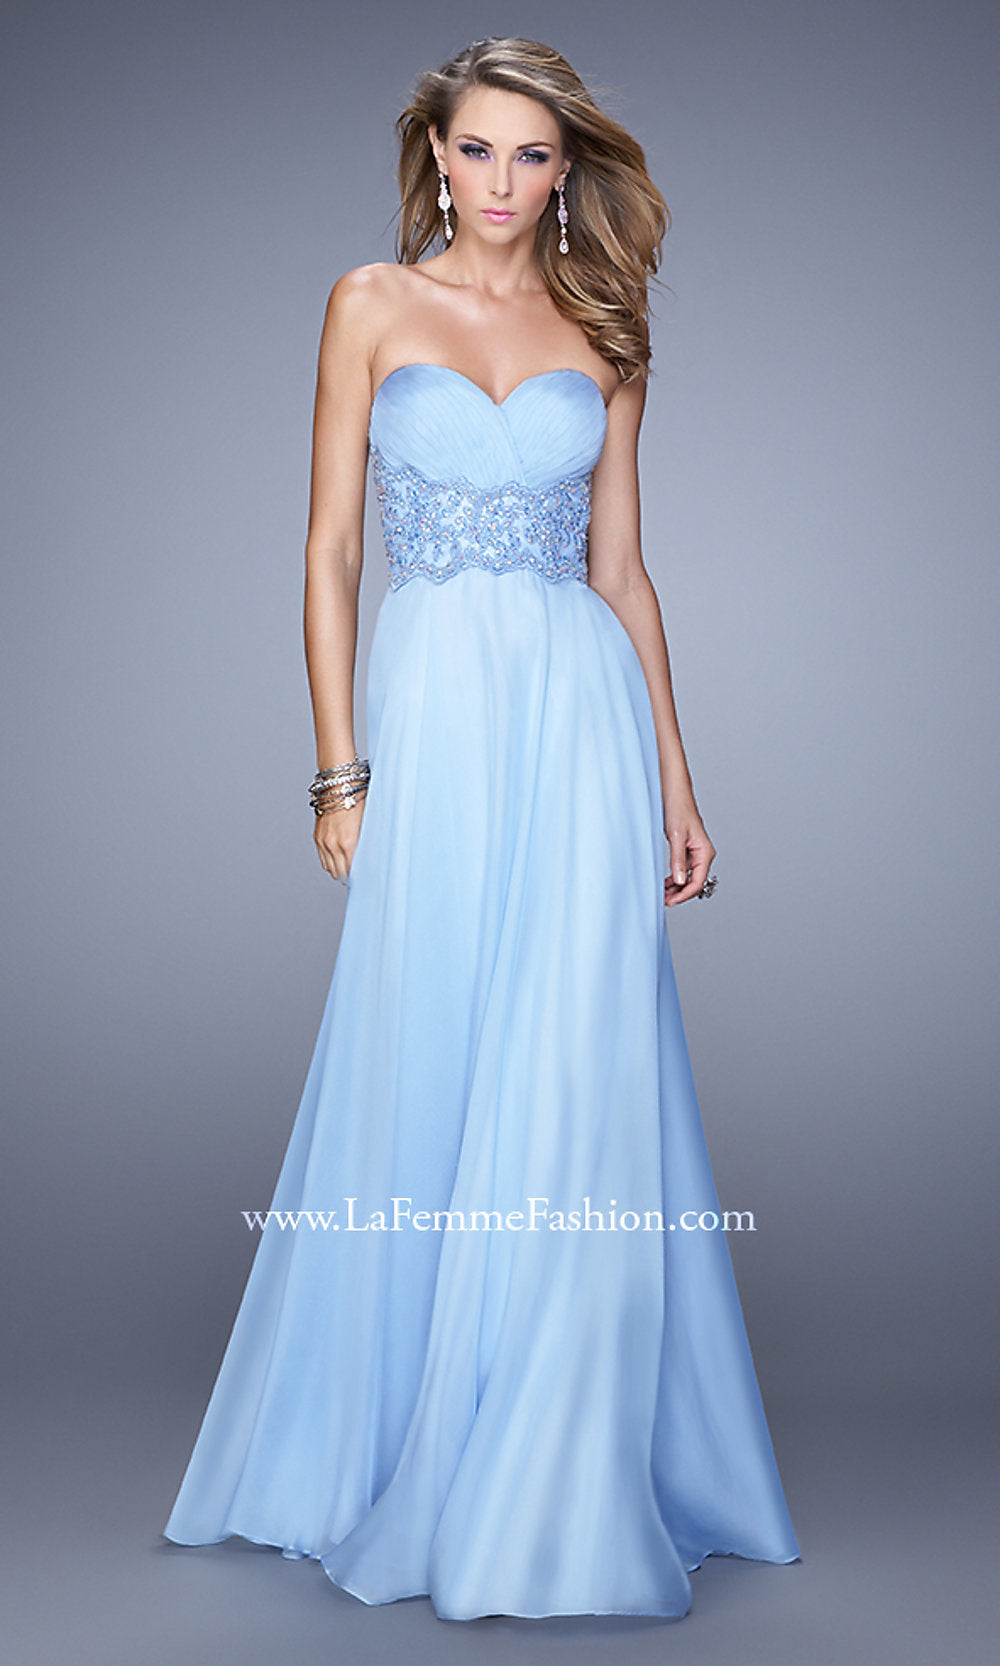 Cloud Blue Floor-Length Strapless Prom Dress by La Femme